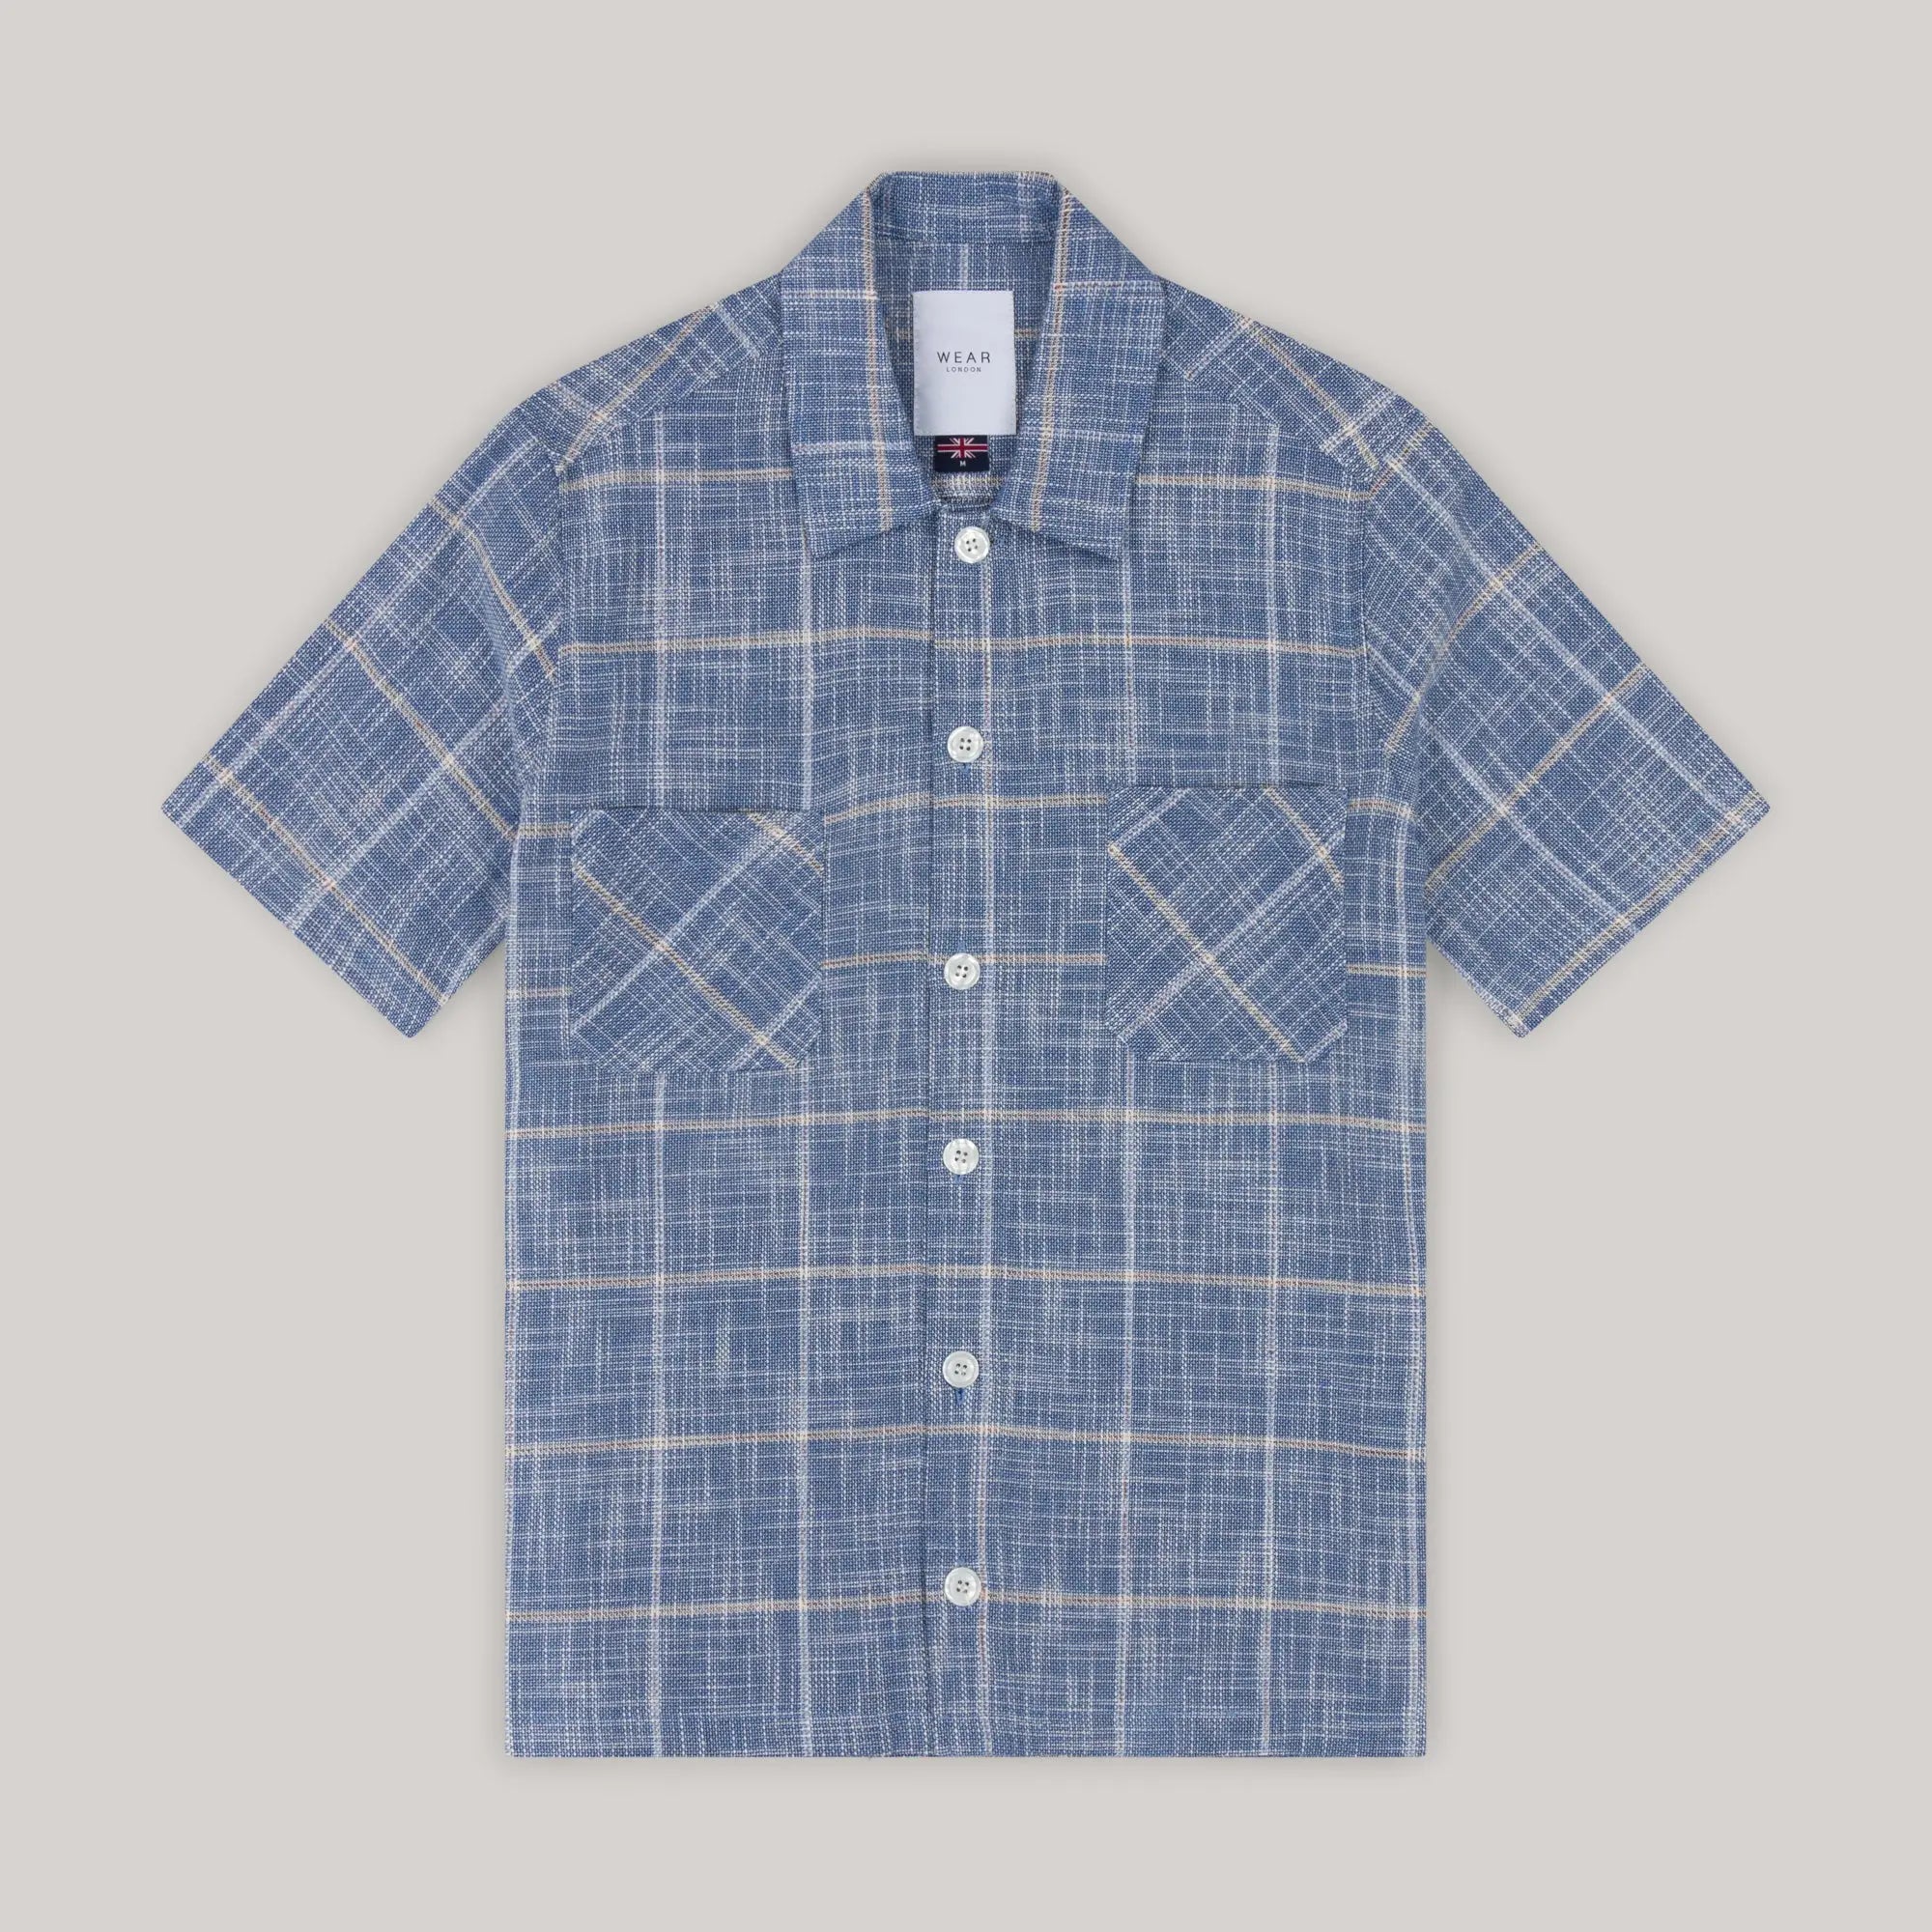 Bethnal Shirt - Mykonos - Sky Blue Check - Wear London